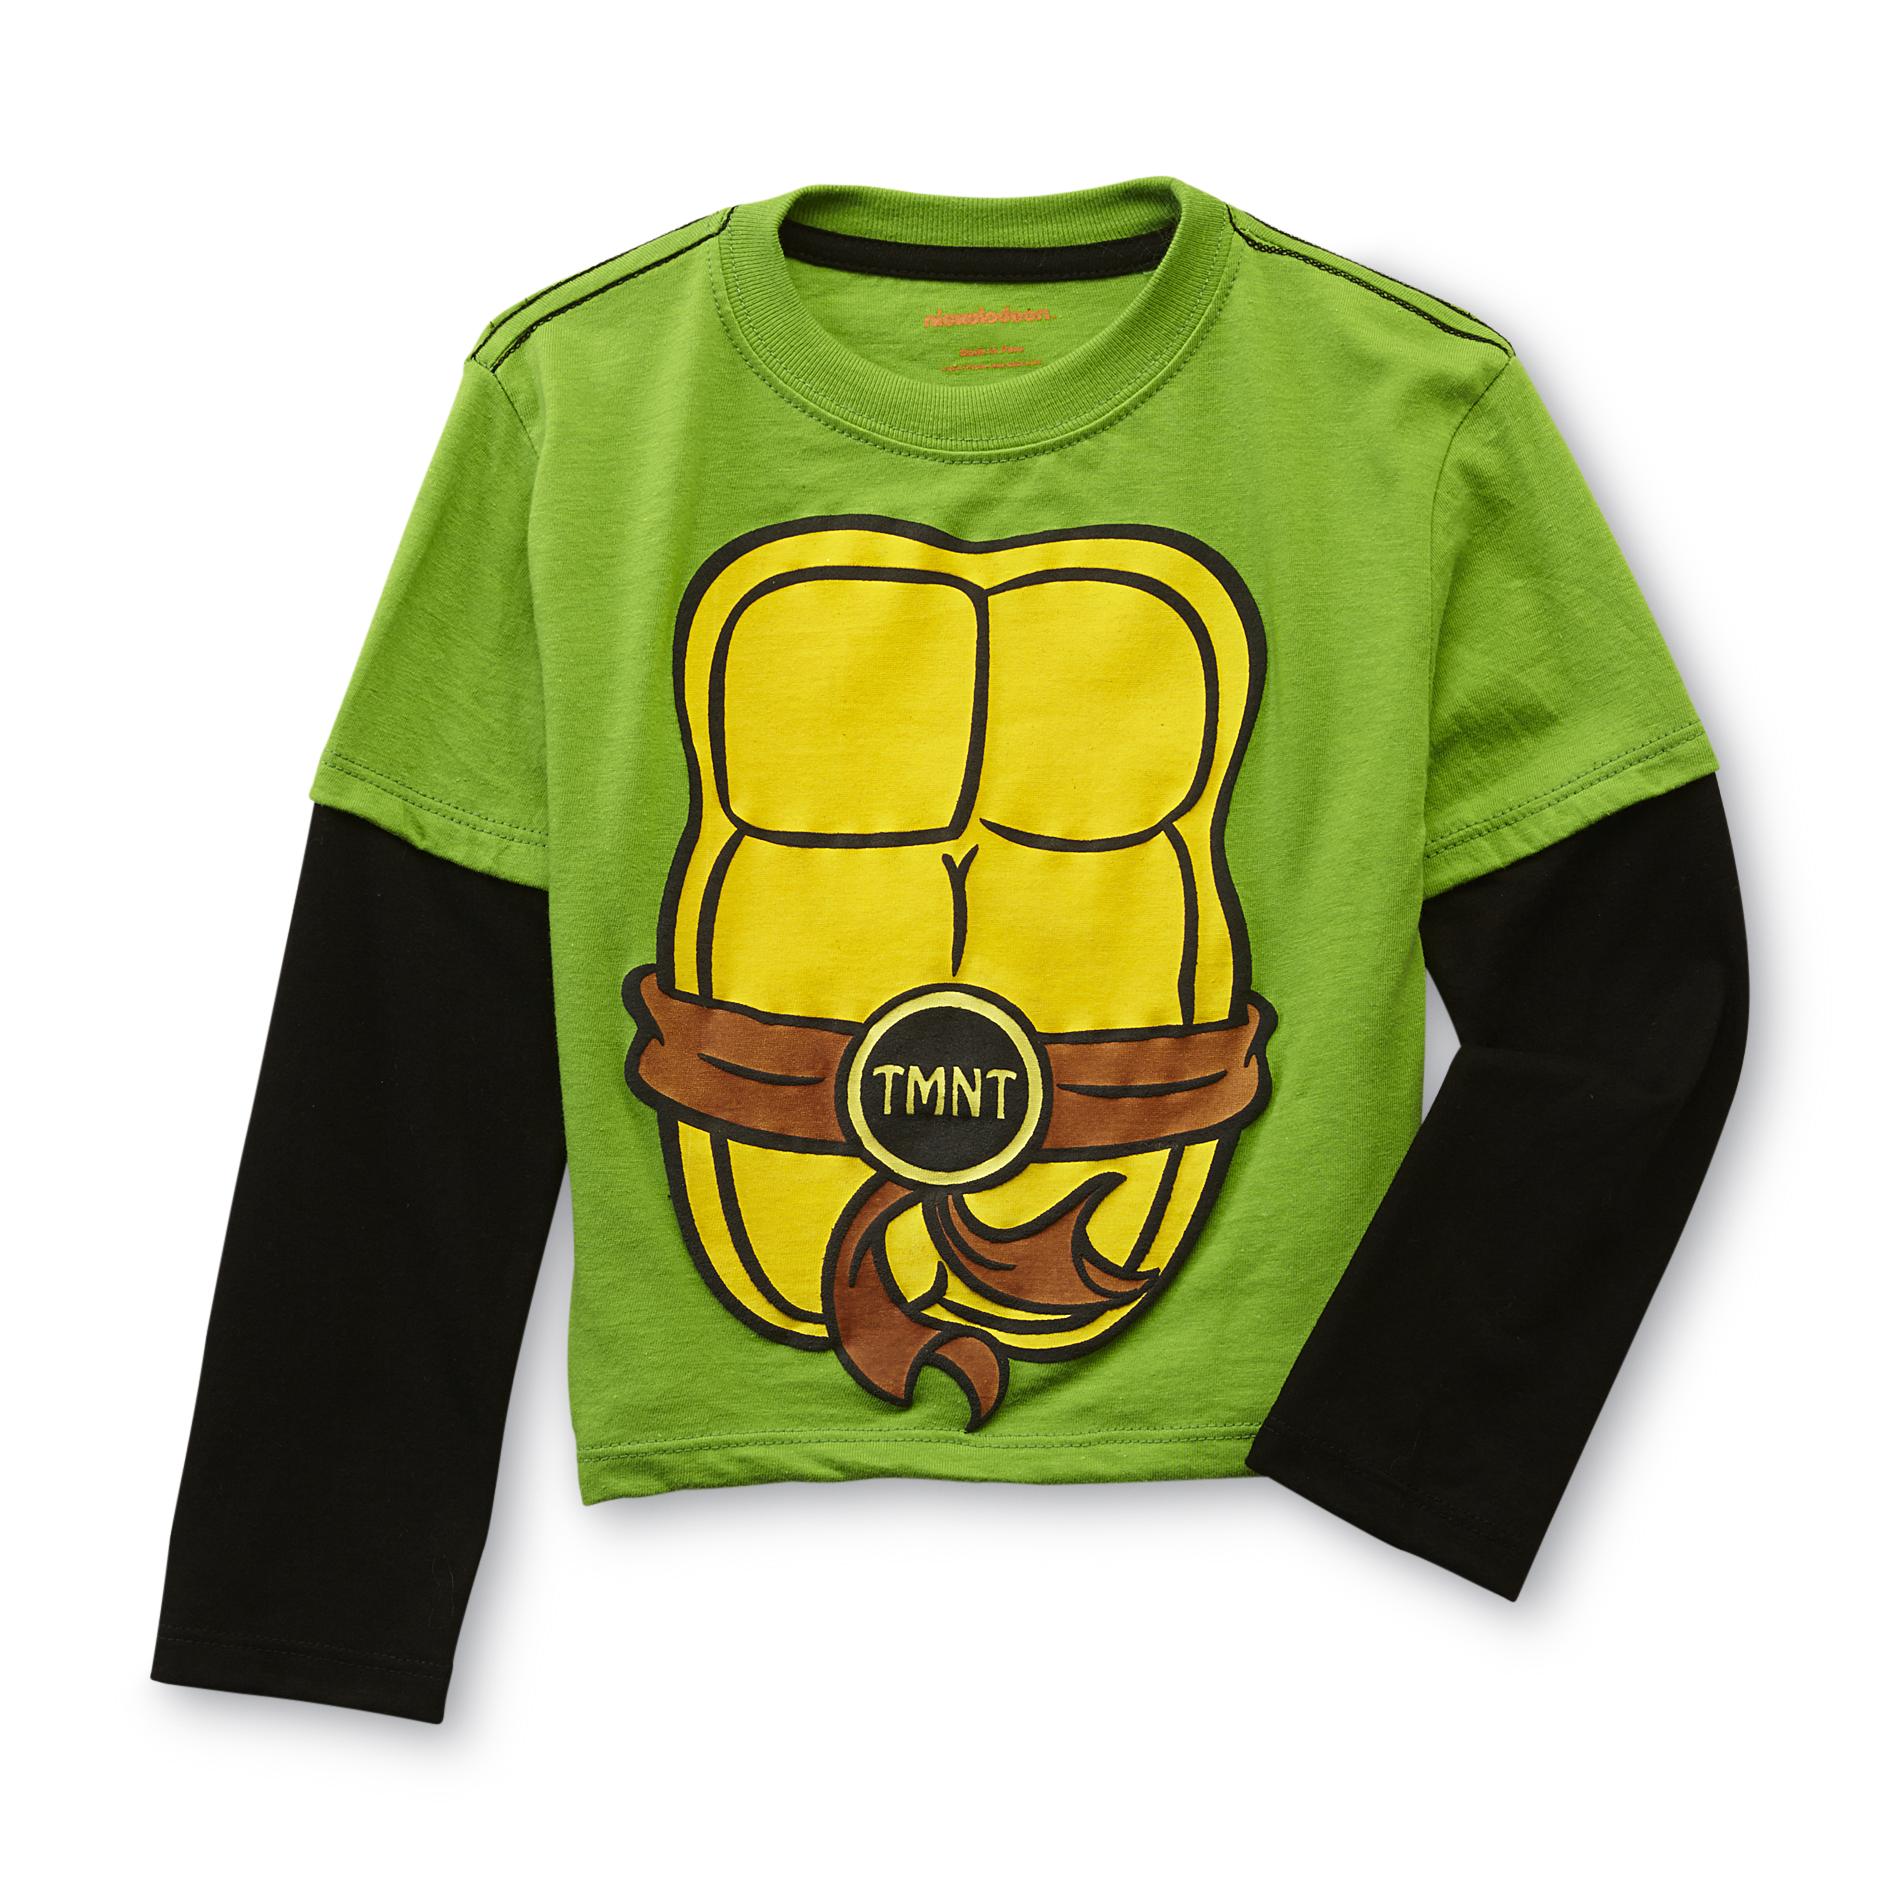 Nickelodeon Teenage Mutant Ninja Turtles Toddler Boy's T-Shirt